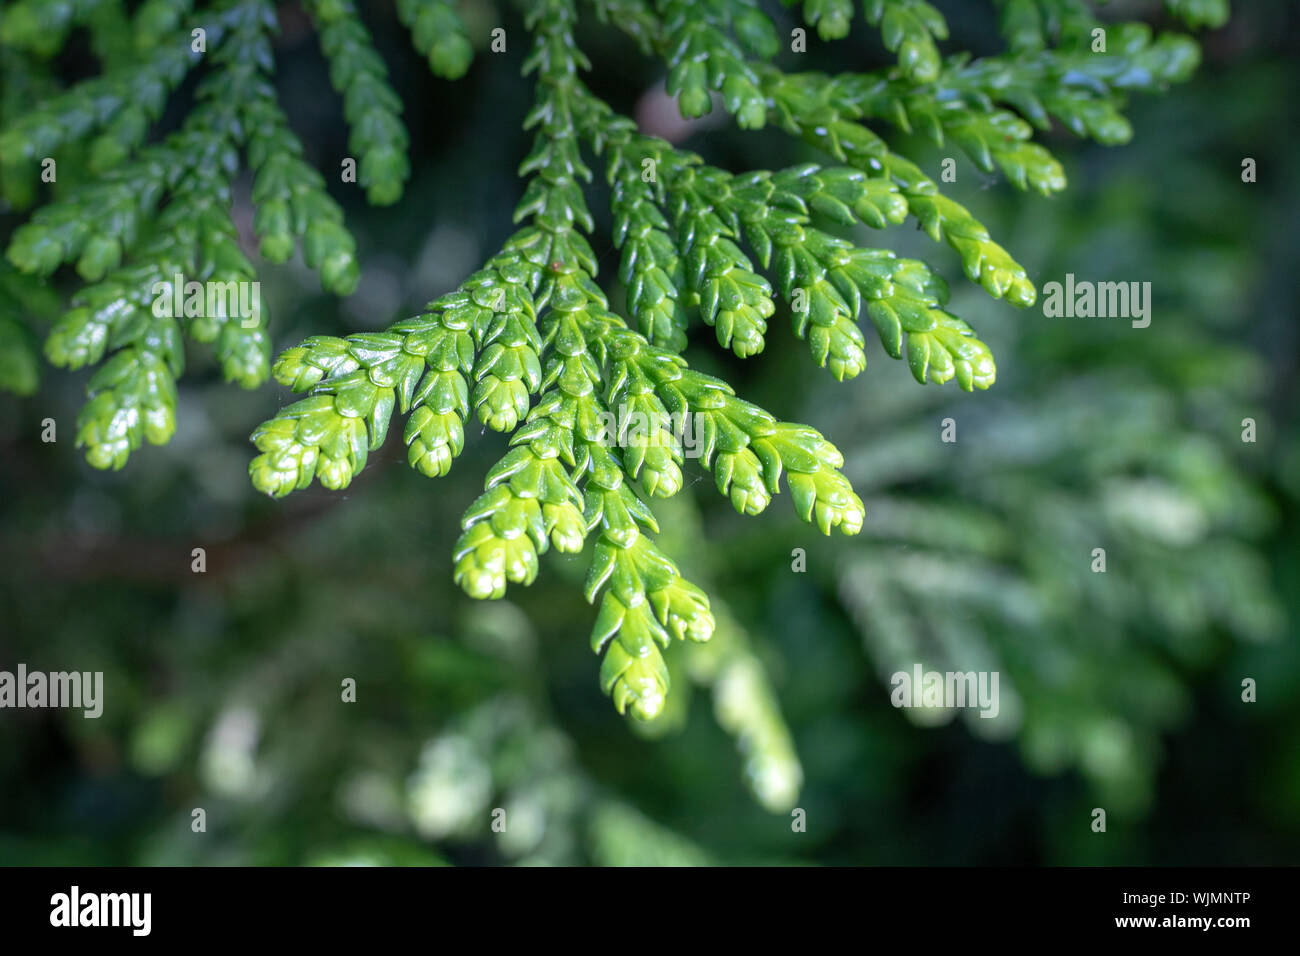 Leaves of Western red cedar (Thuja plicata) tree. Blurred background. Stock Photo